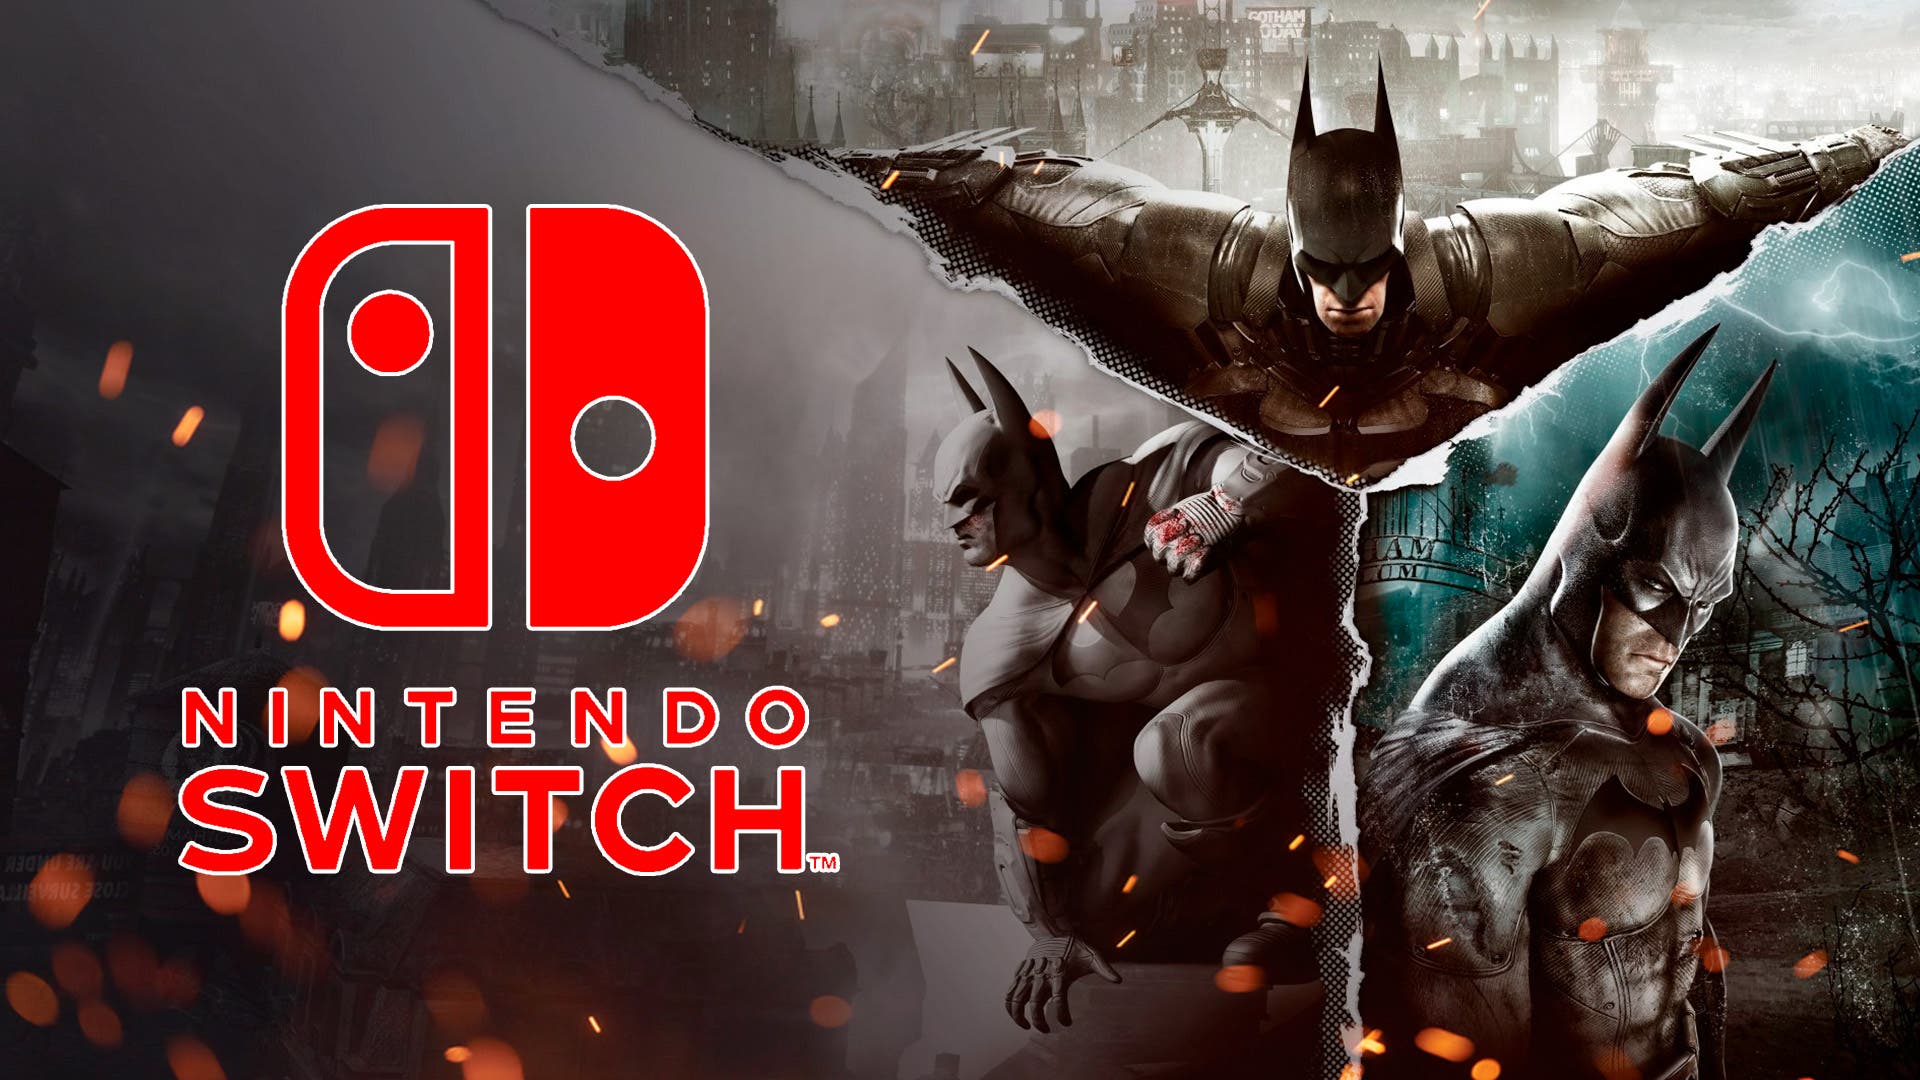 Batman: Arkham Trilogy tiene fecha de estreno para Nintendo Switch